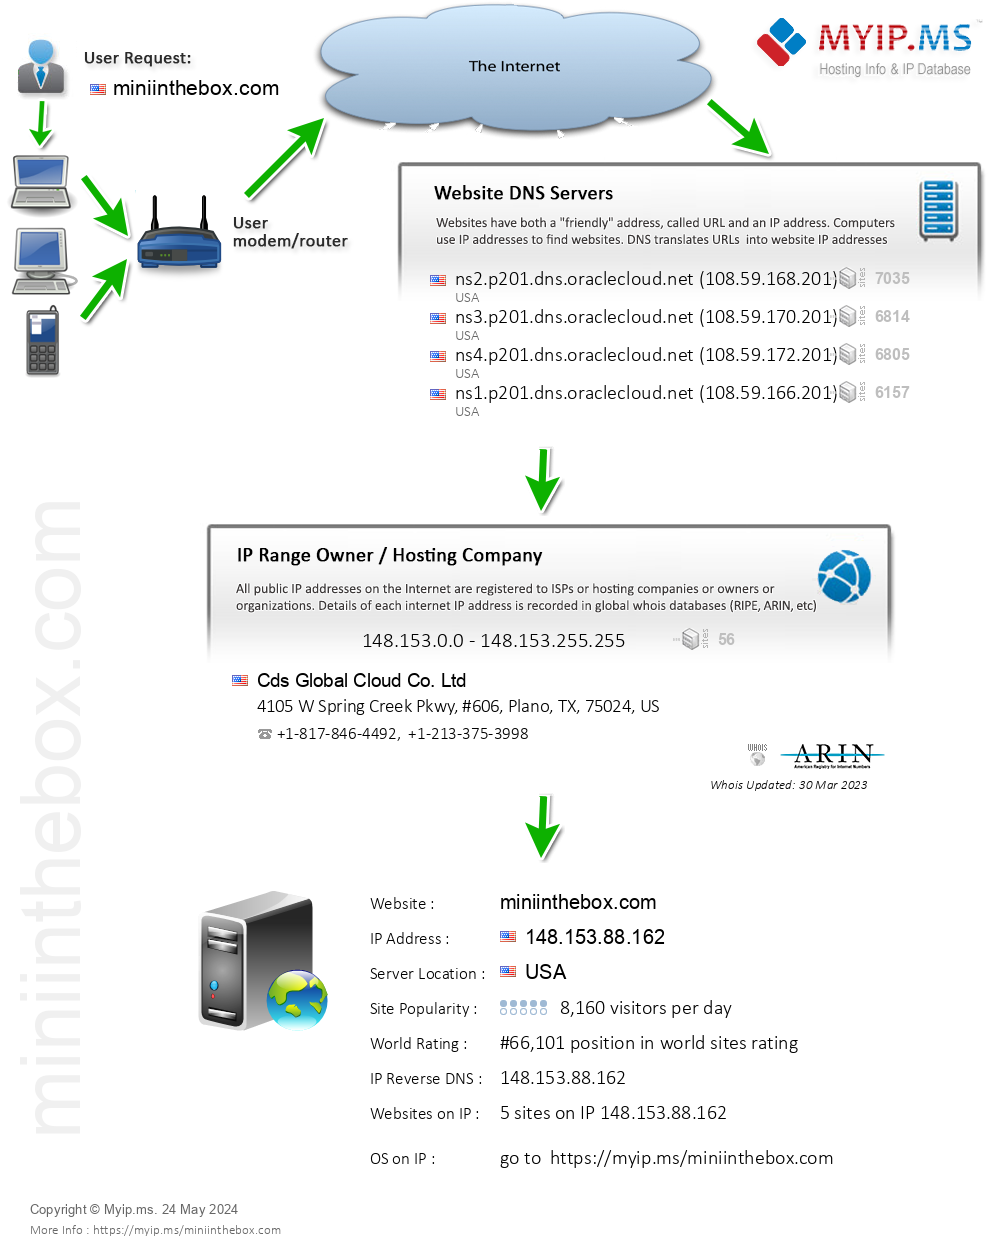 Miniinthebox.com - Website Hosting Visual IP Diagram